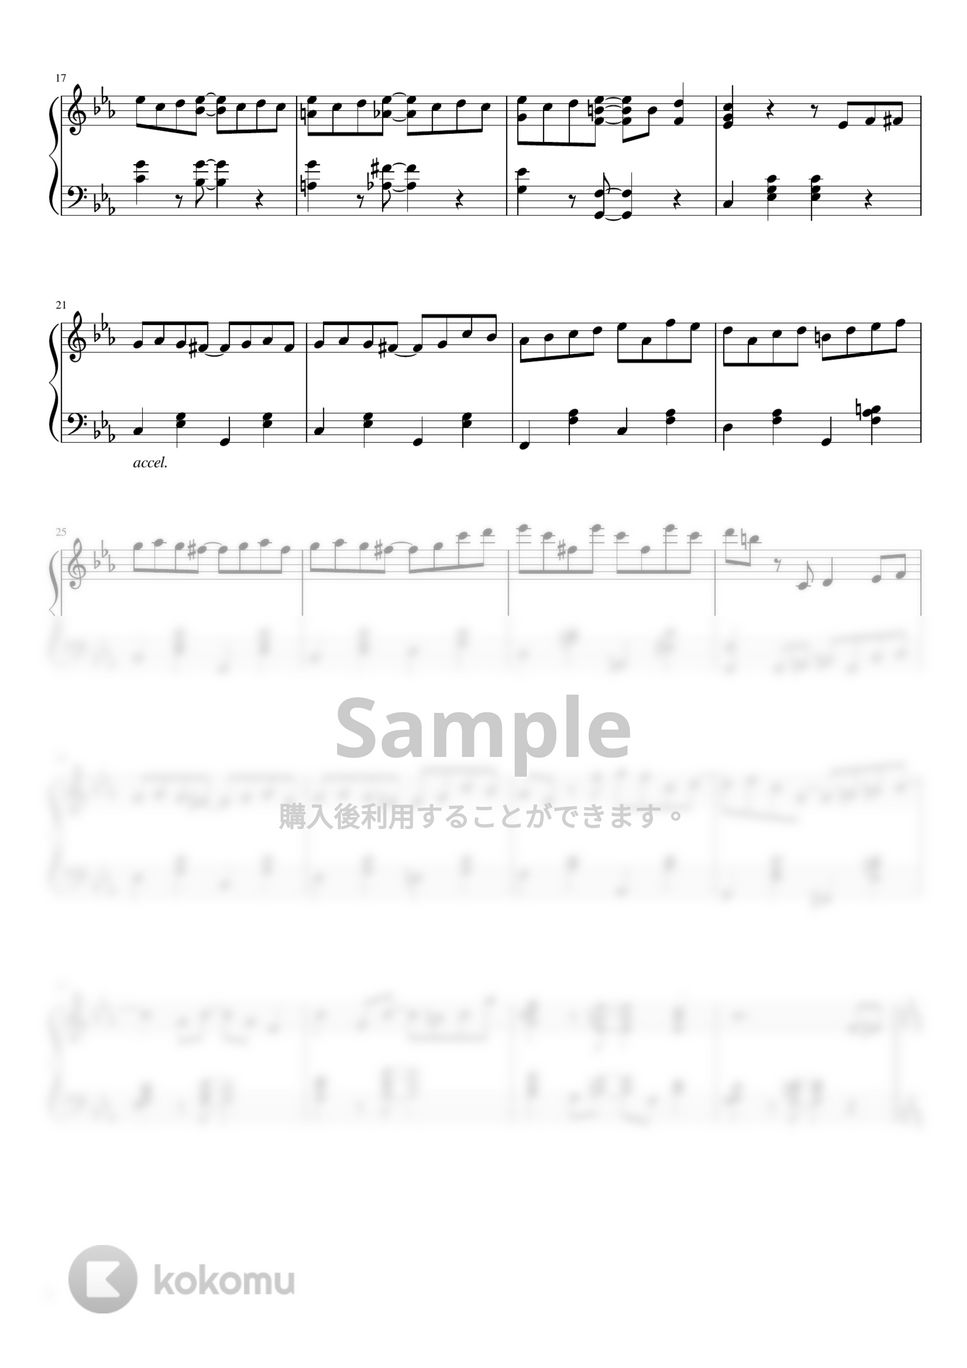 Scott Joplin - (minor) Entertainer by POLYPiano